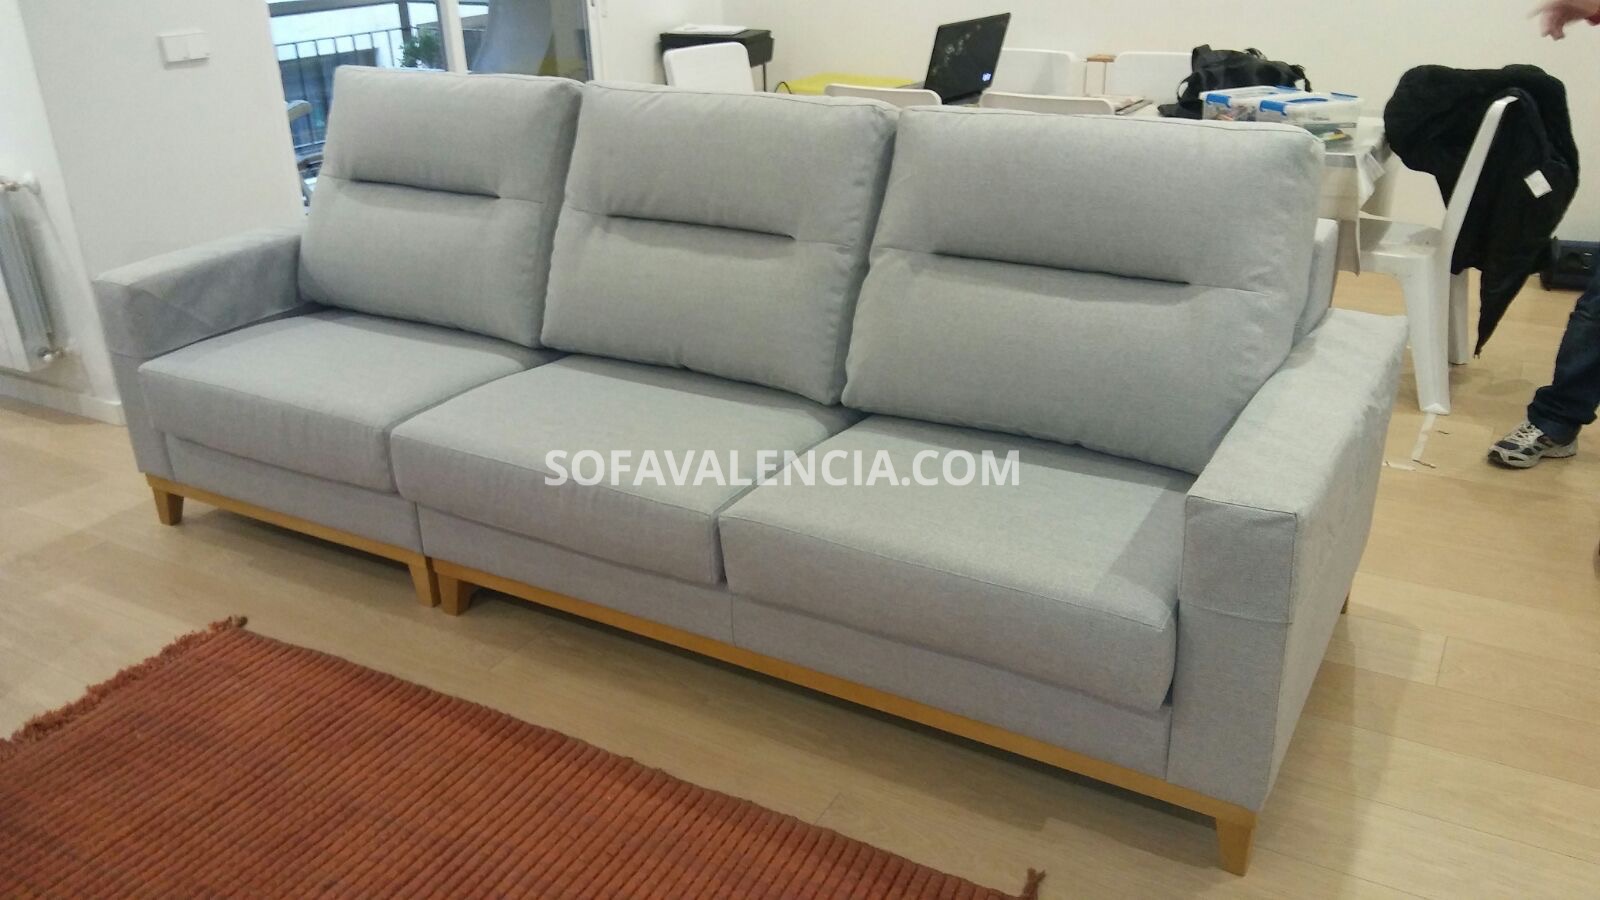 sofa-valencia-fotos-clientes-36